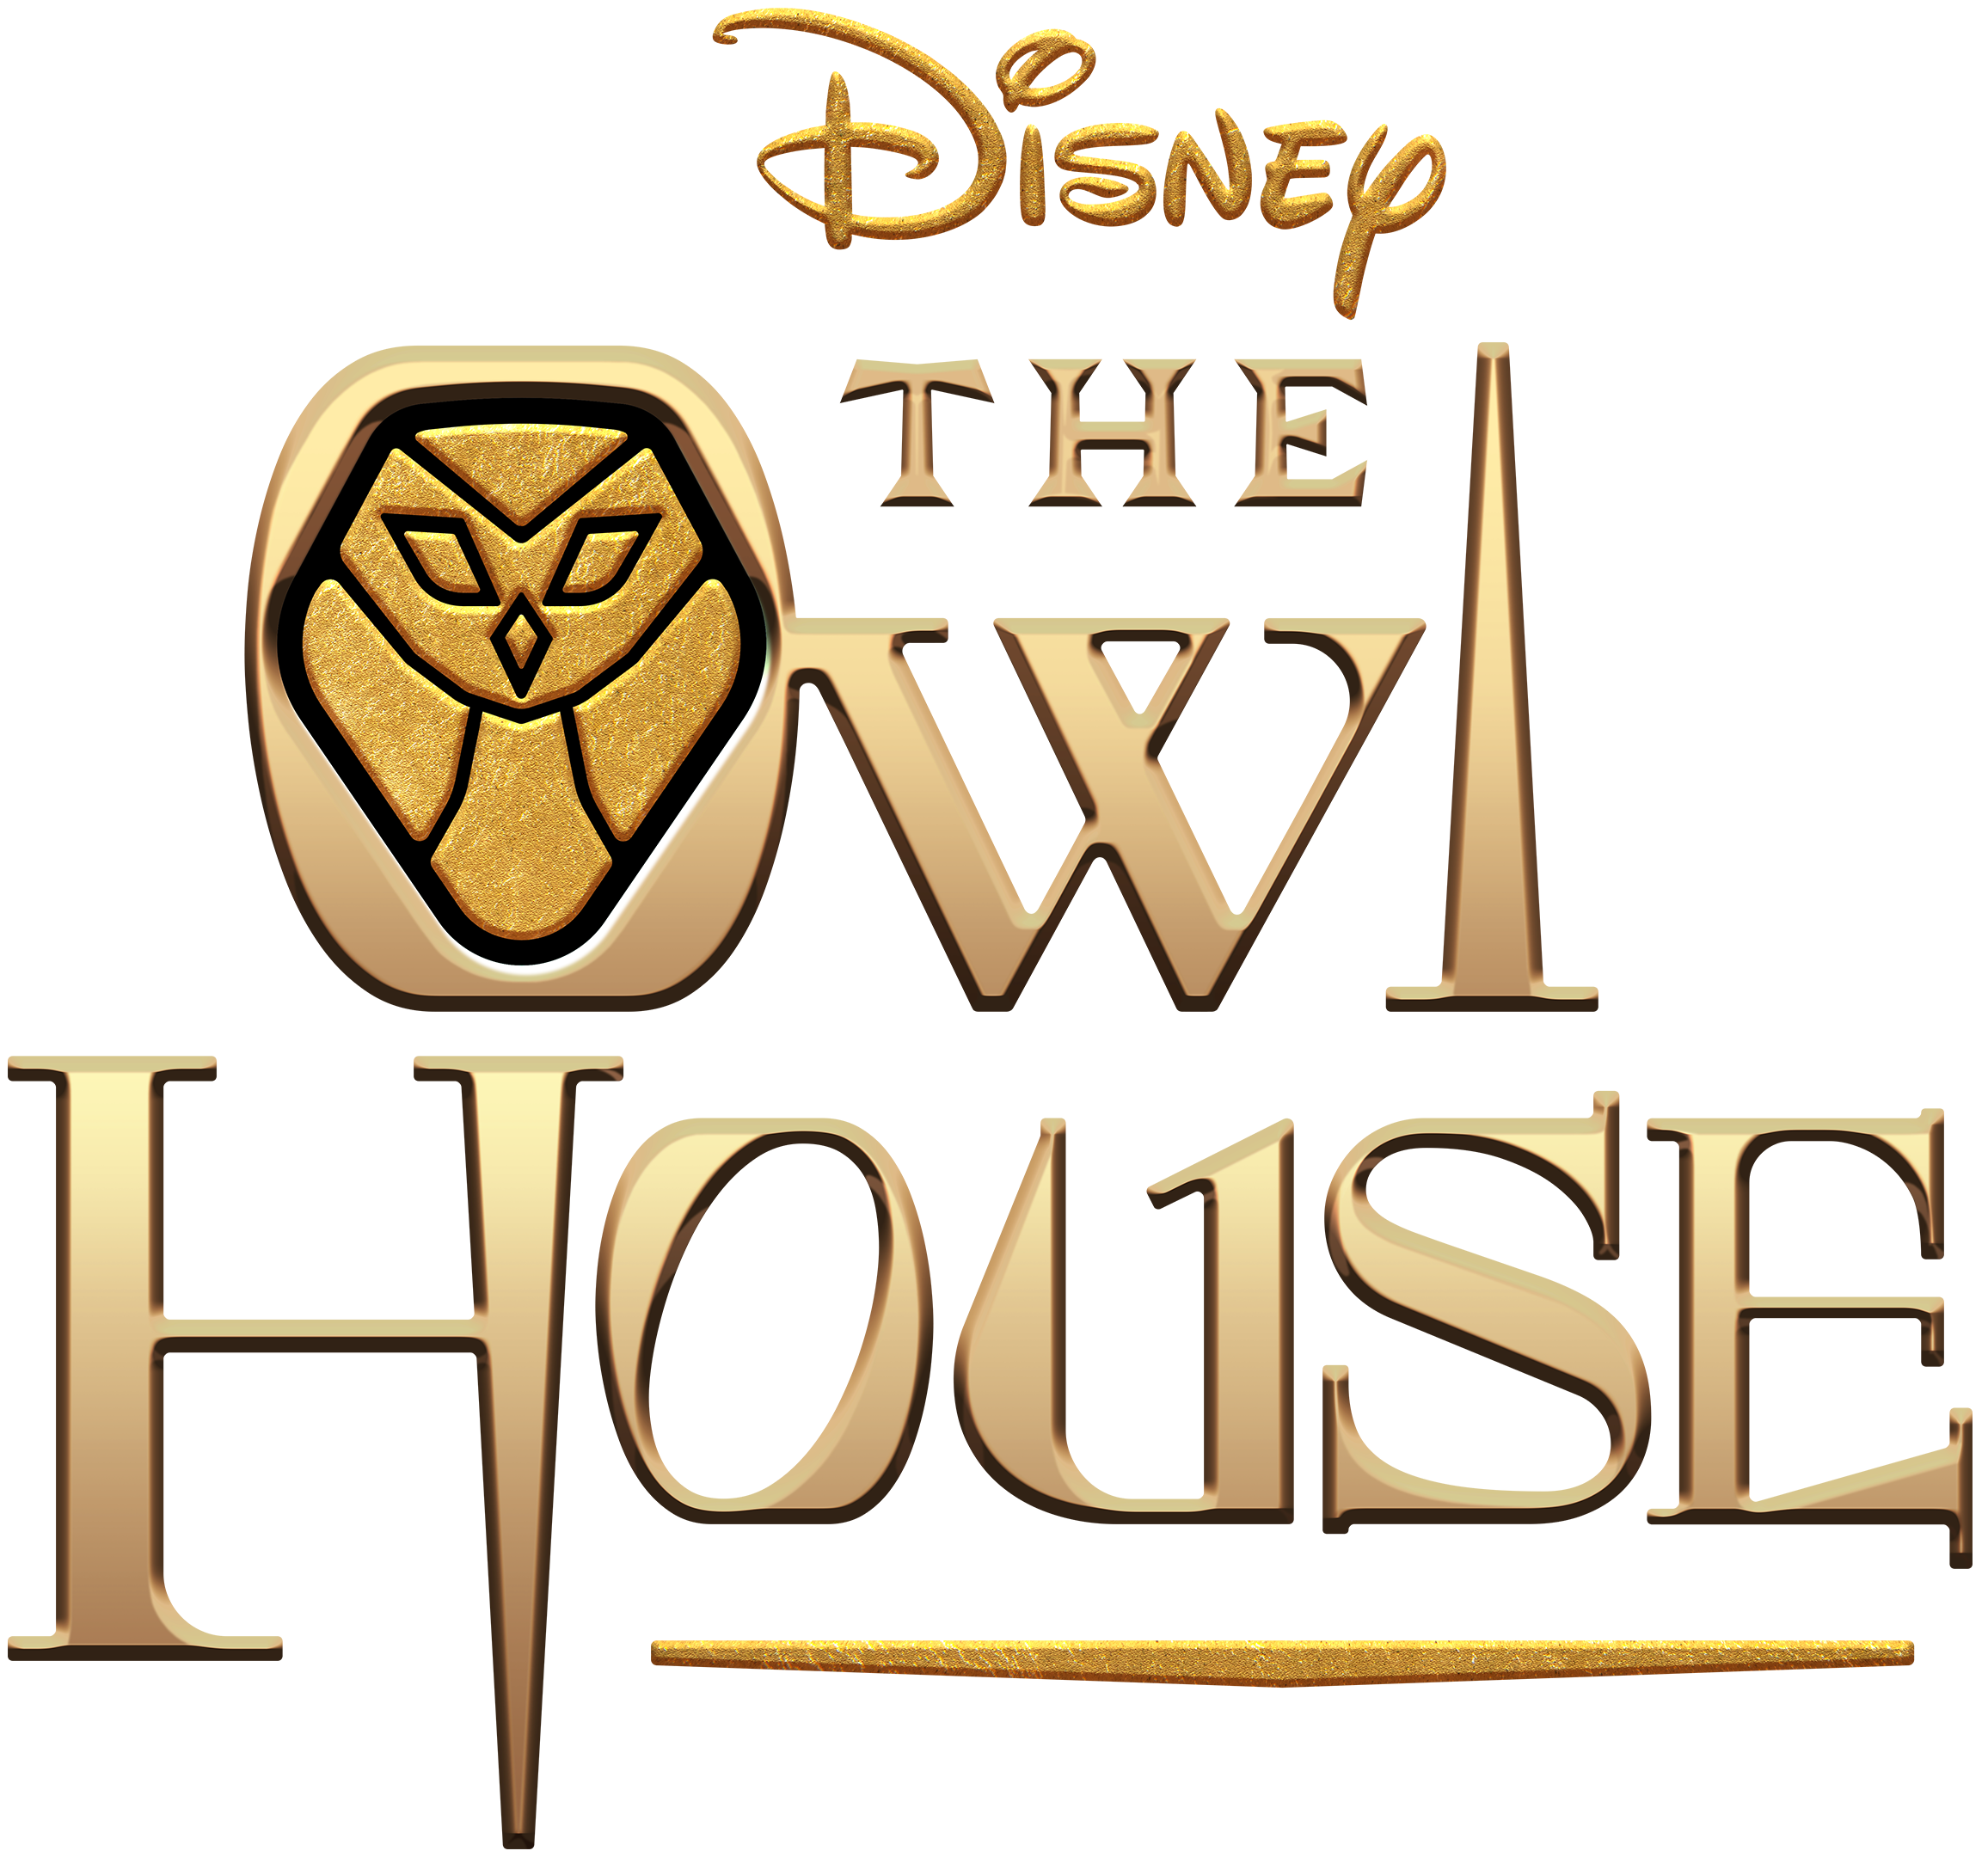 Watch The Owl House Season 3 in Hong Kong on Disney+